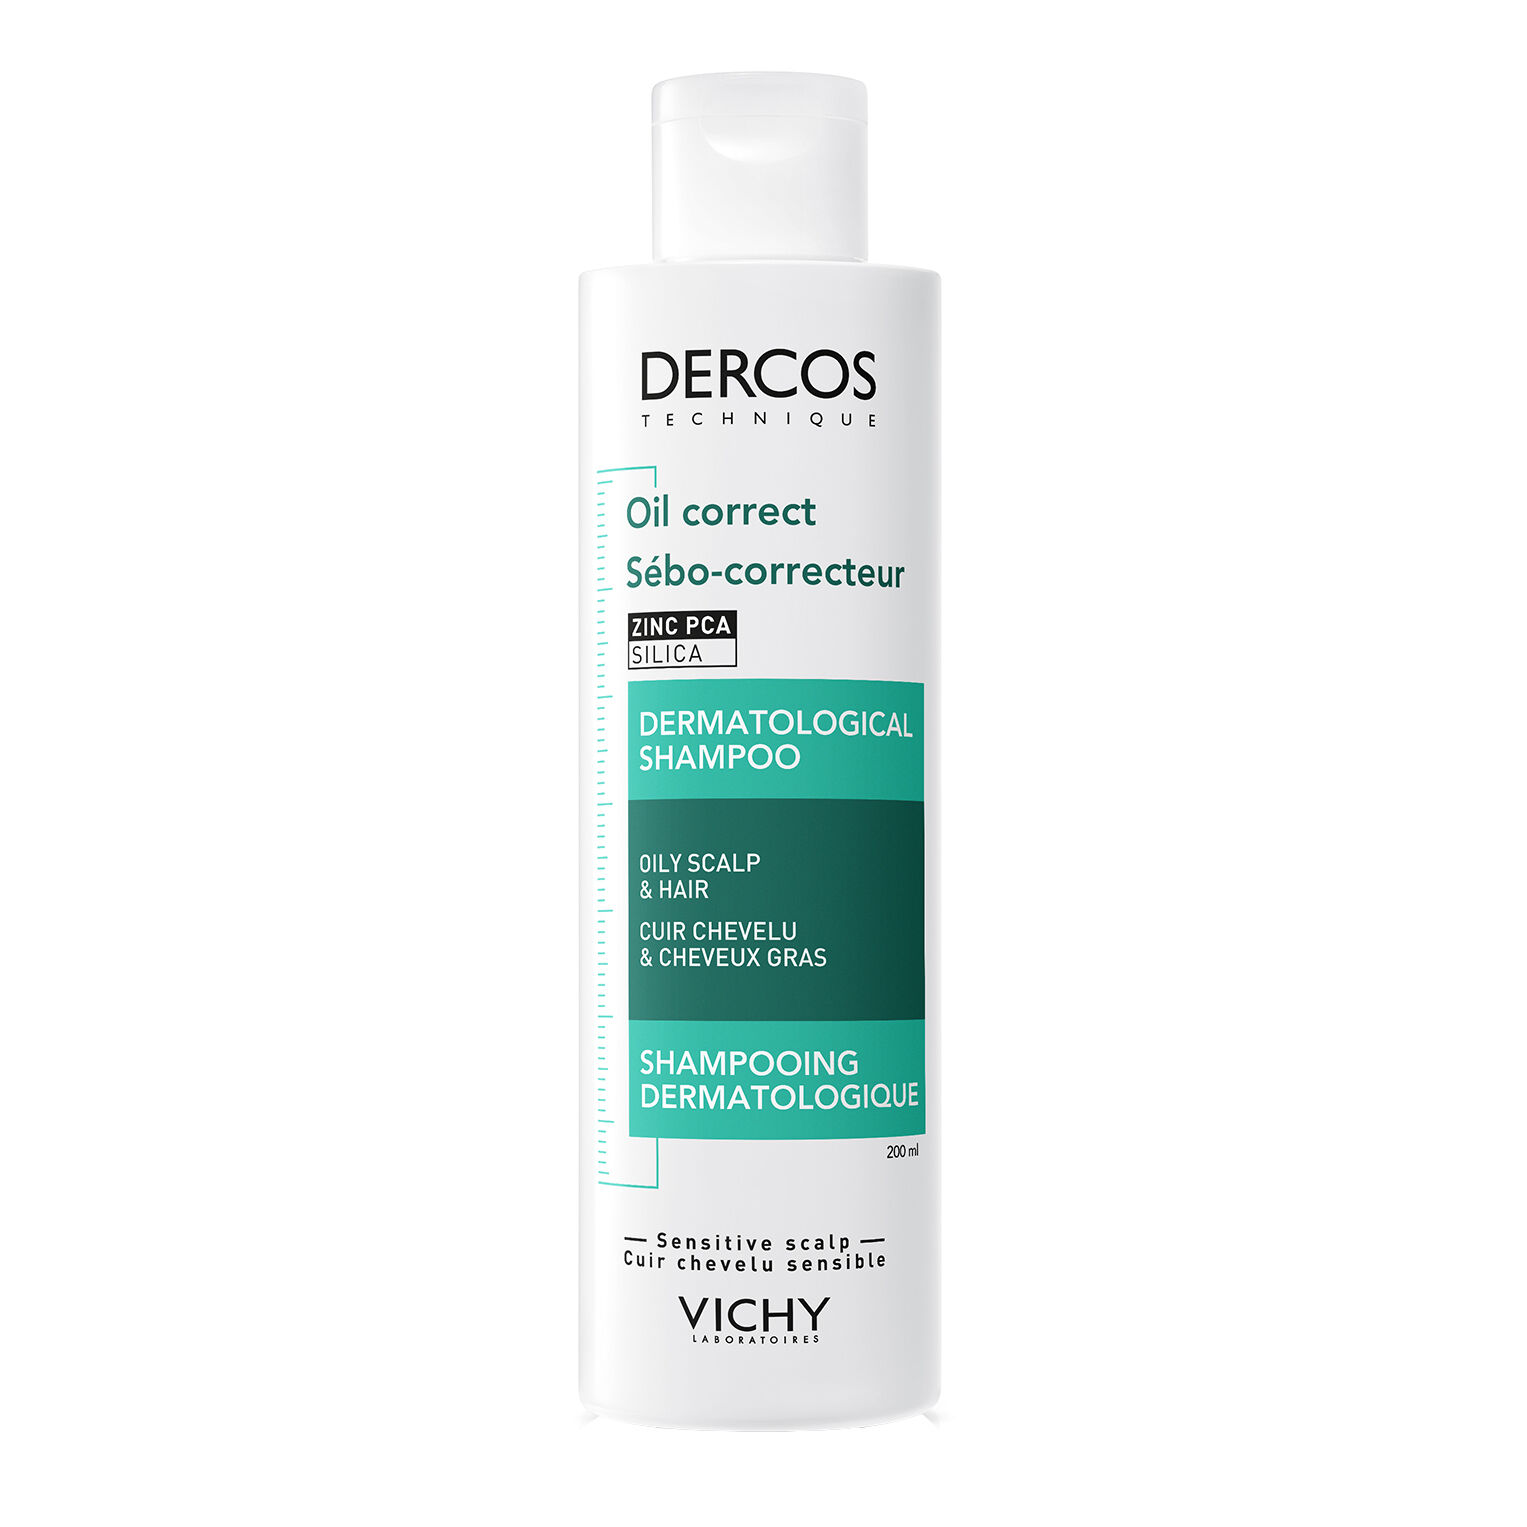 Vichy Dercos technique oil control shampoo 200 ml